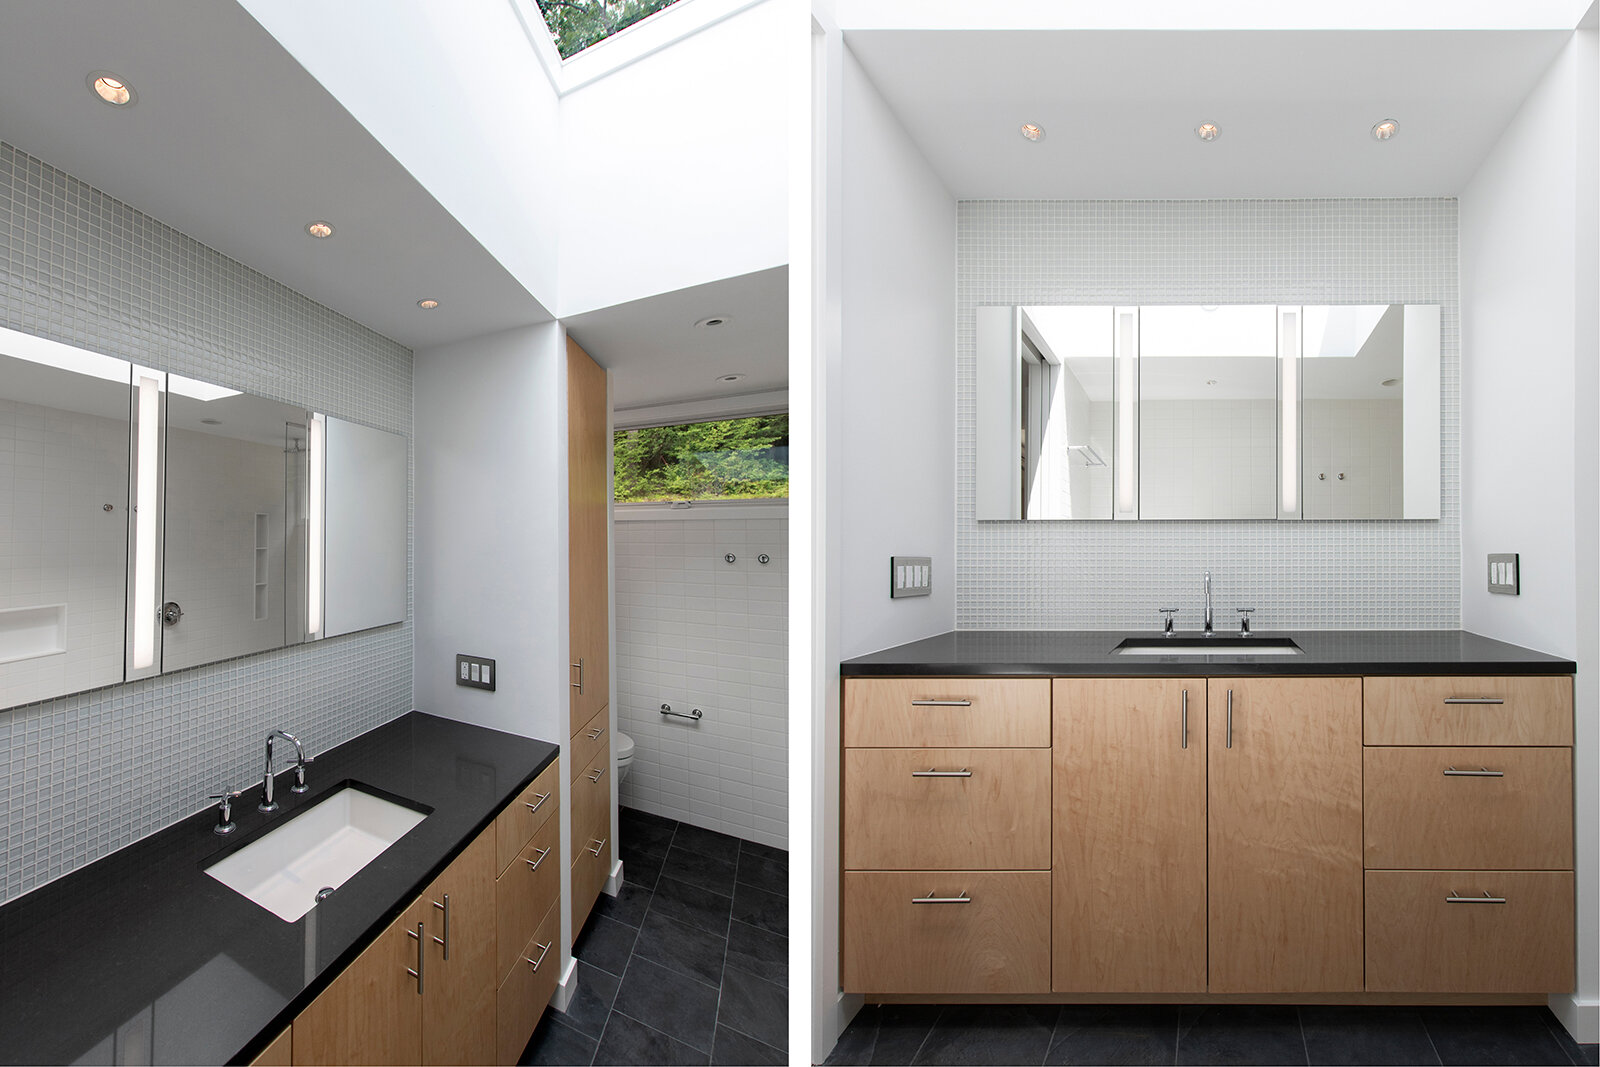 17-res4-re4a-resolution-4-architecture-modern-modular-prefab-sharon residence-interior-master-bathroom-sink.jpg